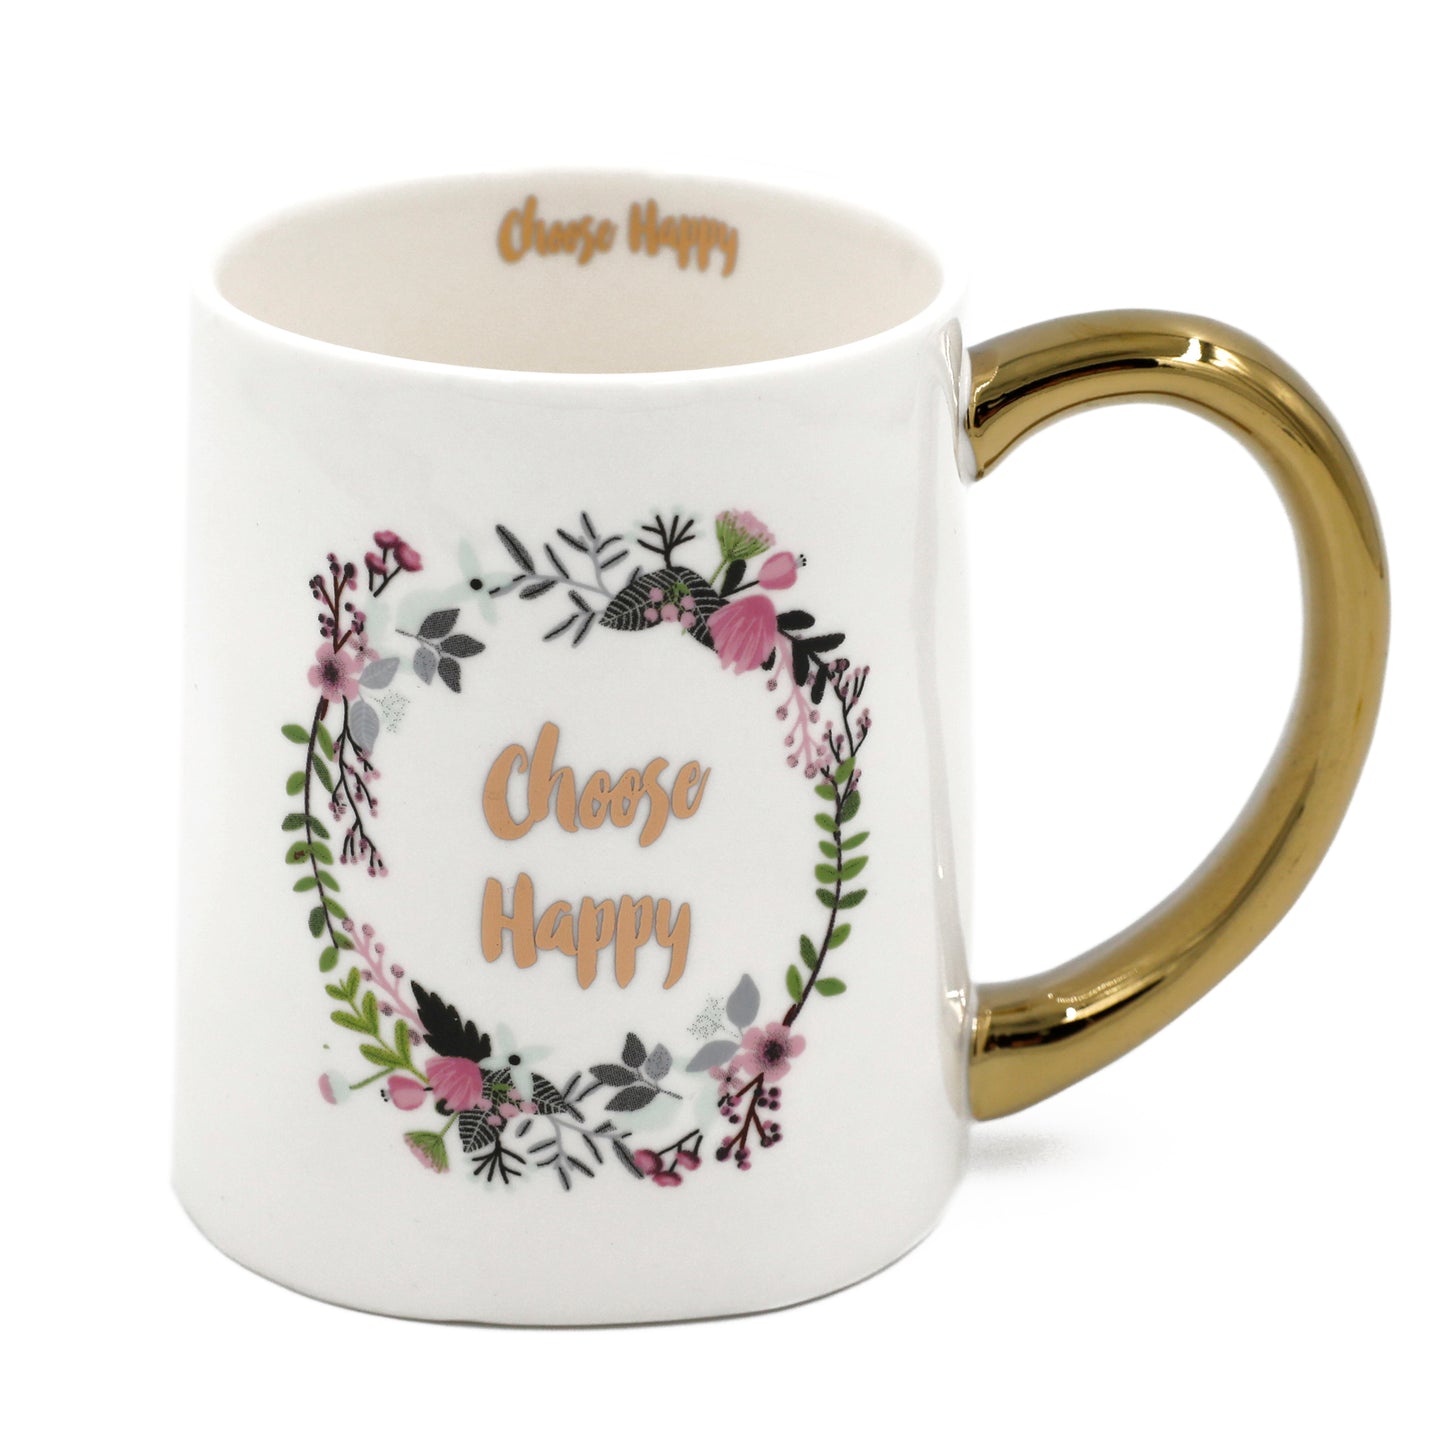 13.5 oz Stoneware Ceramic Mug With Sayings,"Choose Happy"